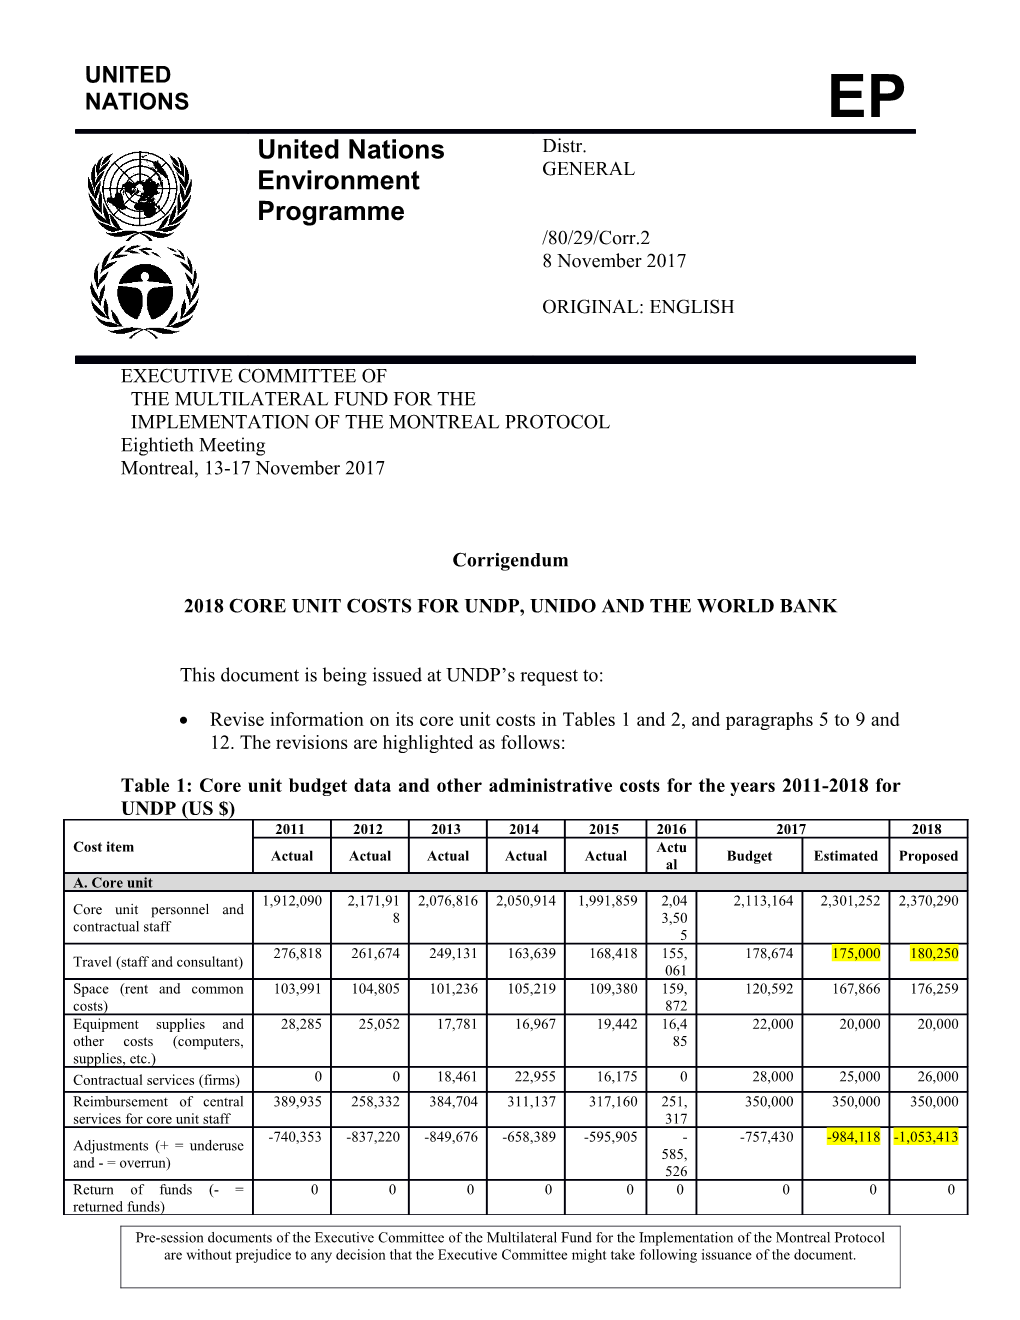 Corrigendum - 2018 Core Unit Costs for UNDP, UNIDO and the World Bank